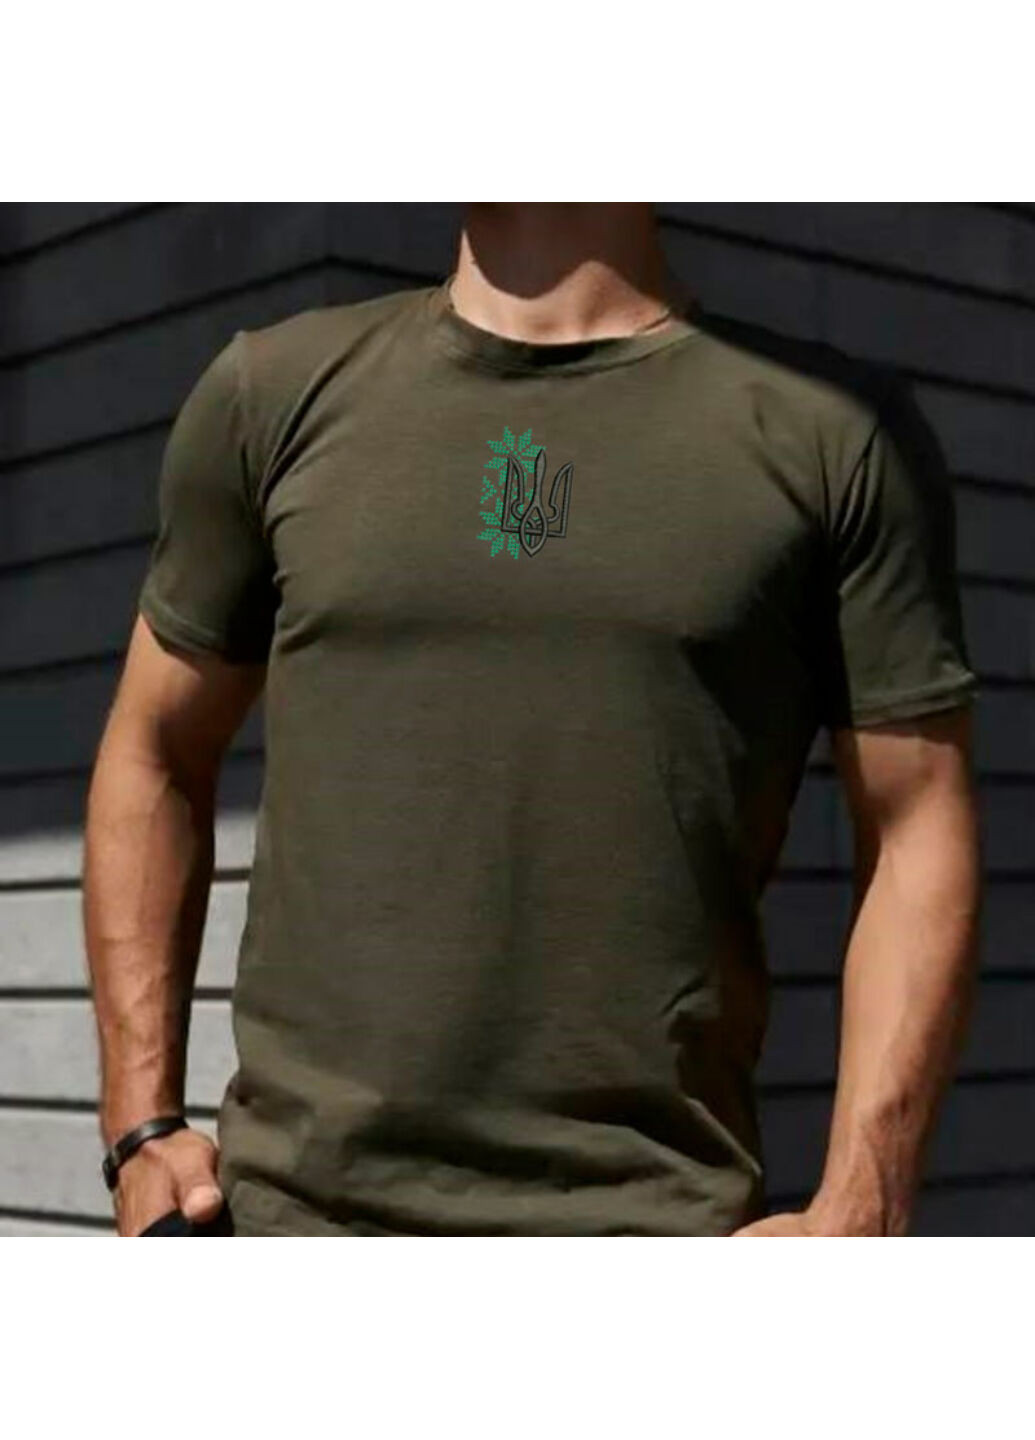 Хаки (оливковая) футболка з вишивкою тризуба 01-2 мужская хаки 3xl No Brand